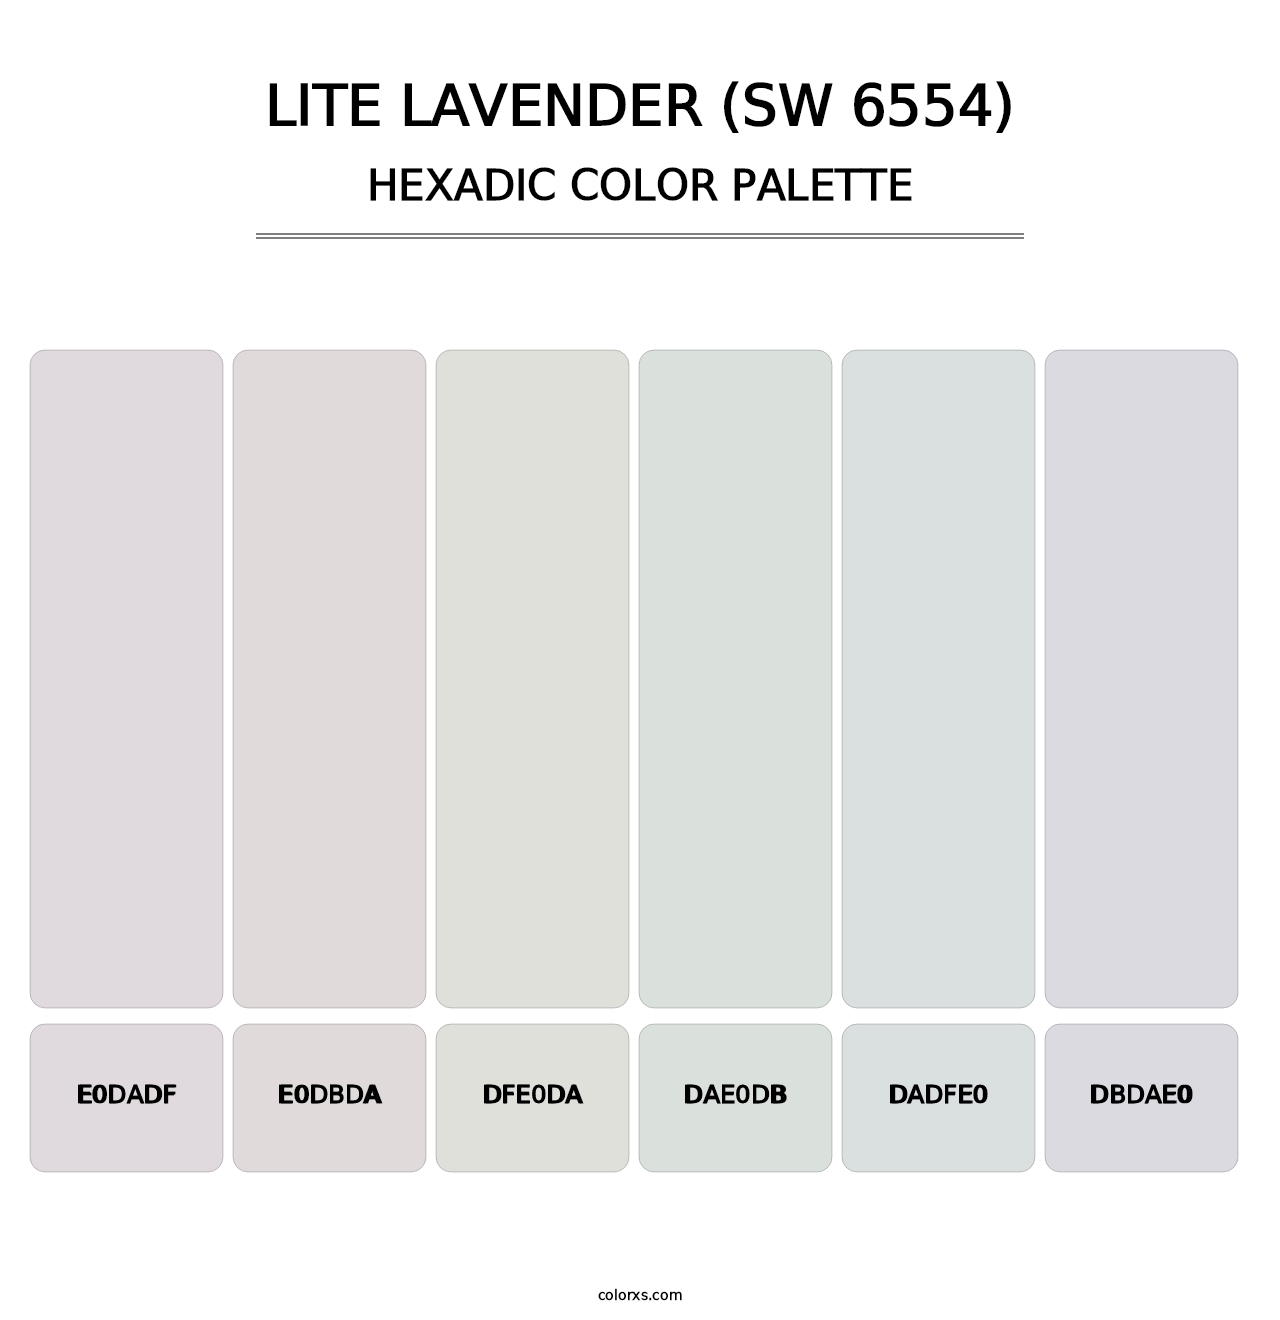 Lite Lavender (SW 6554) - Hexadic Color Palette